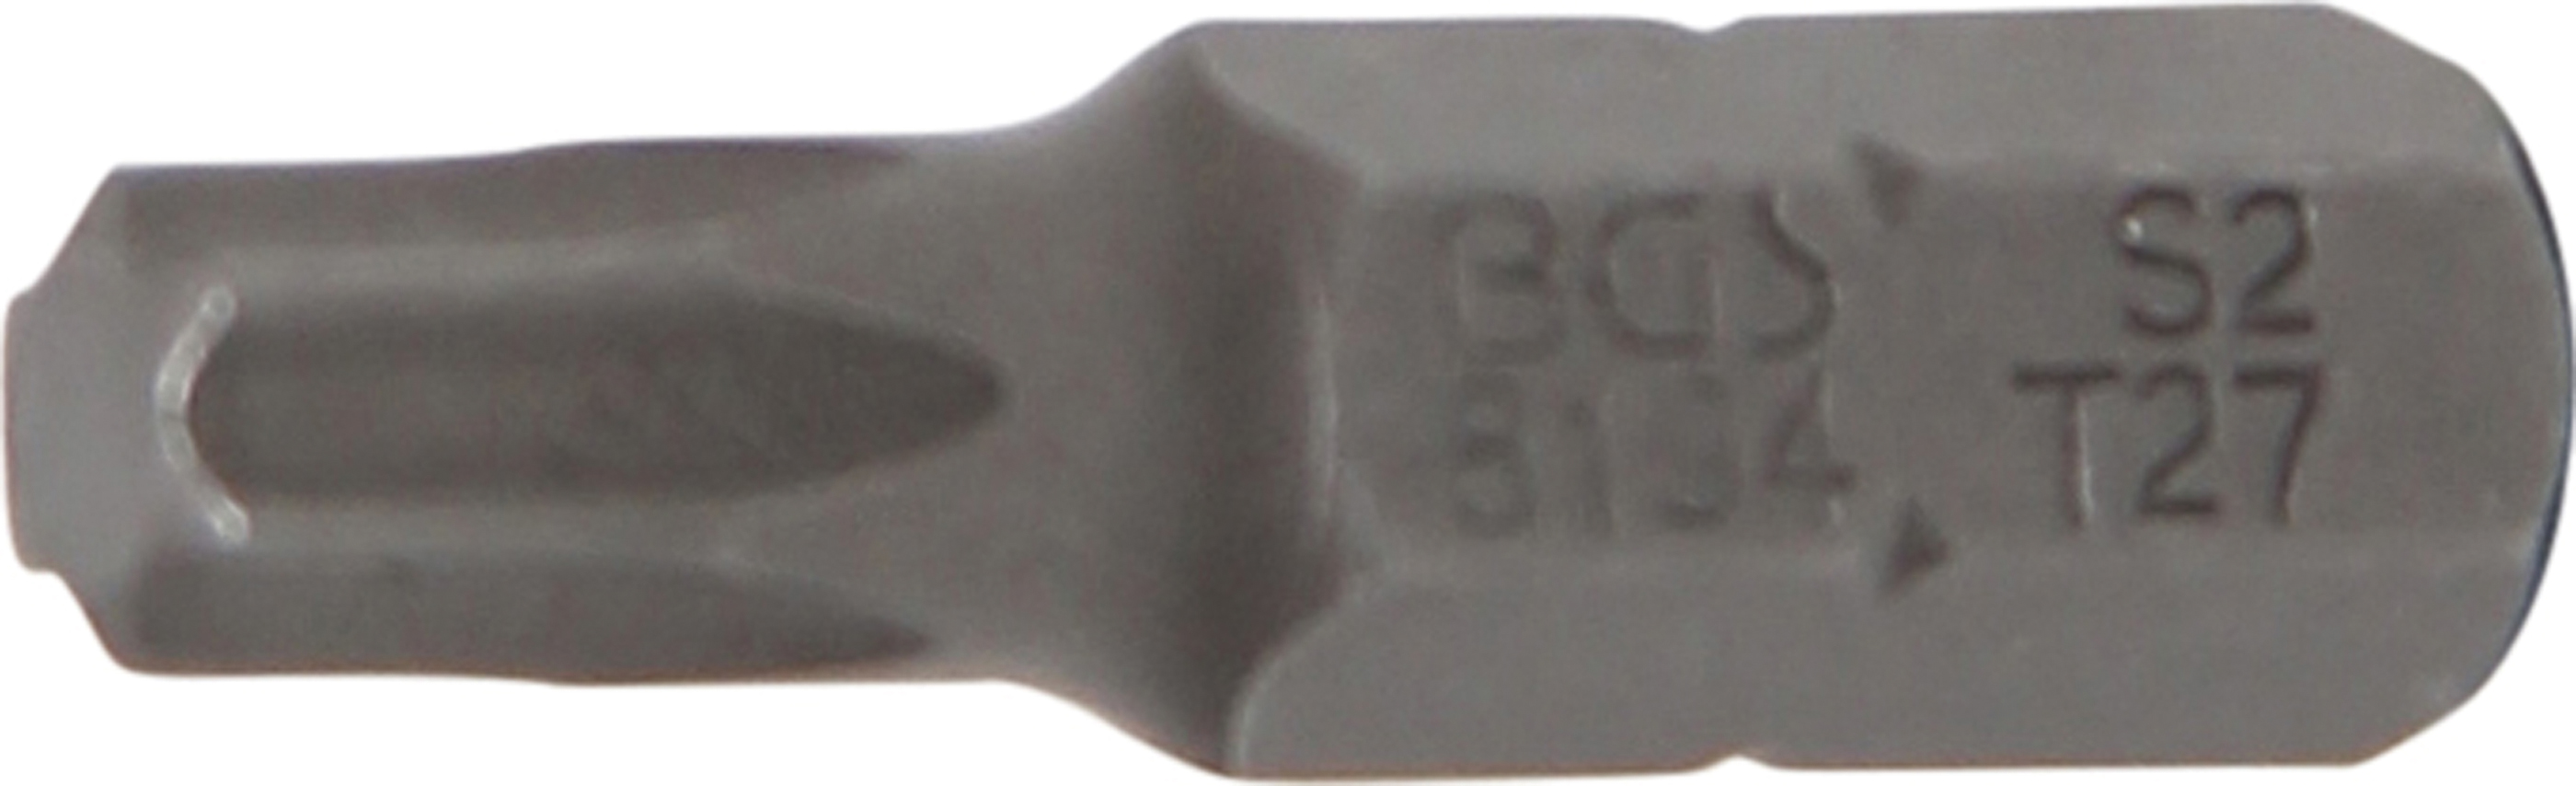 BGS Bit | Länge 25 mm | Antrieb Außensechskant 6,3 mm (1/4") | T-Profil (für Torx) T27